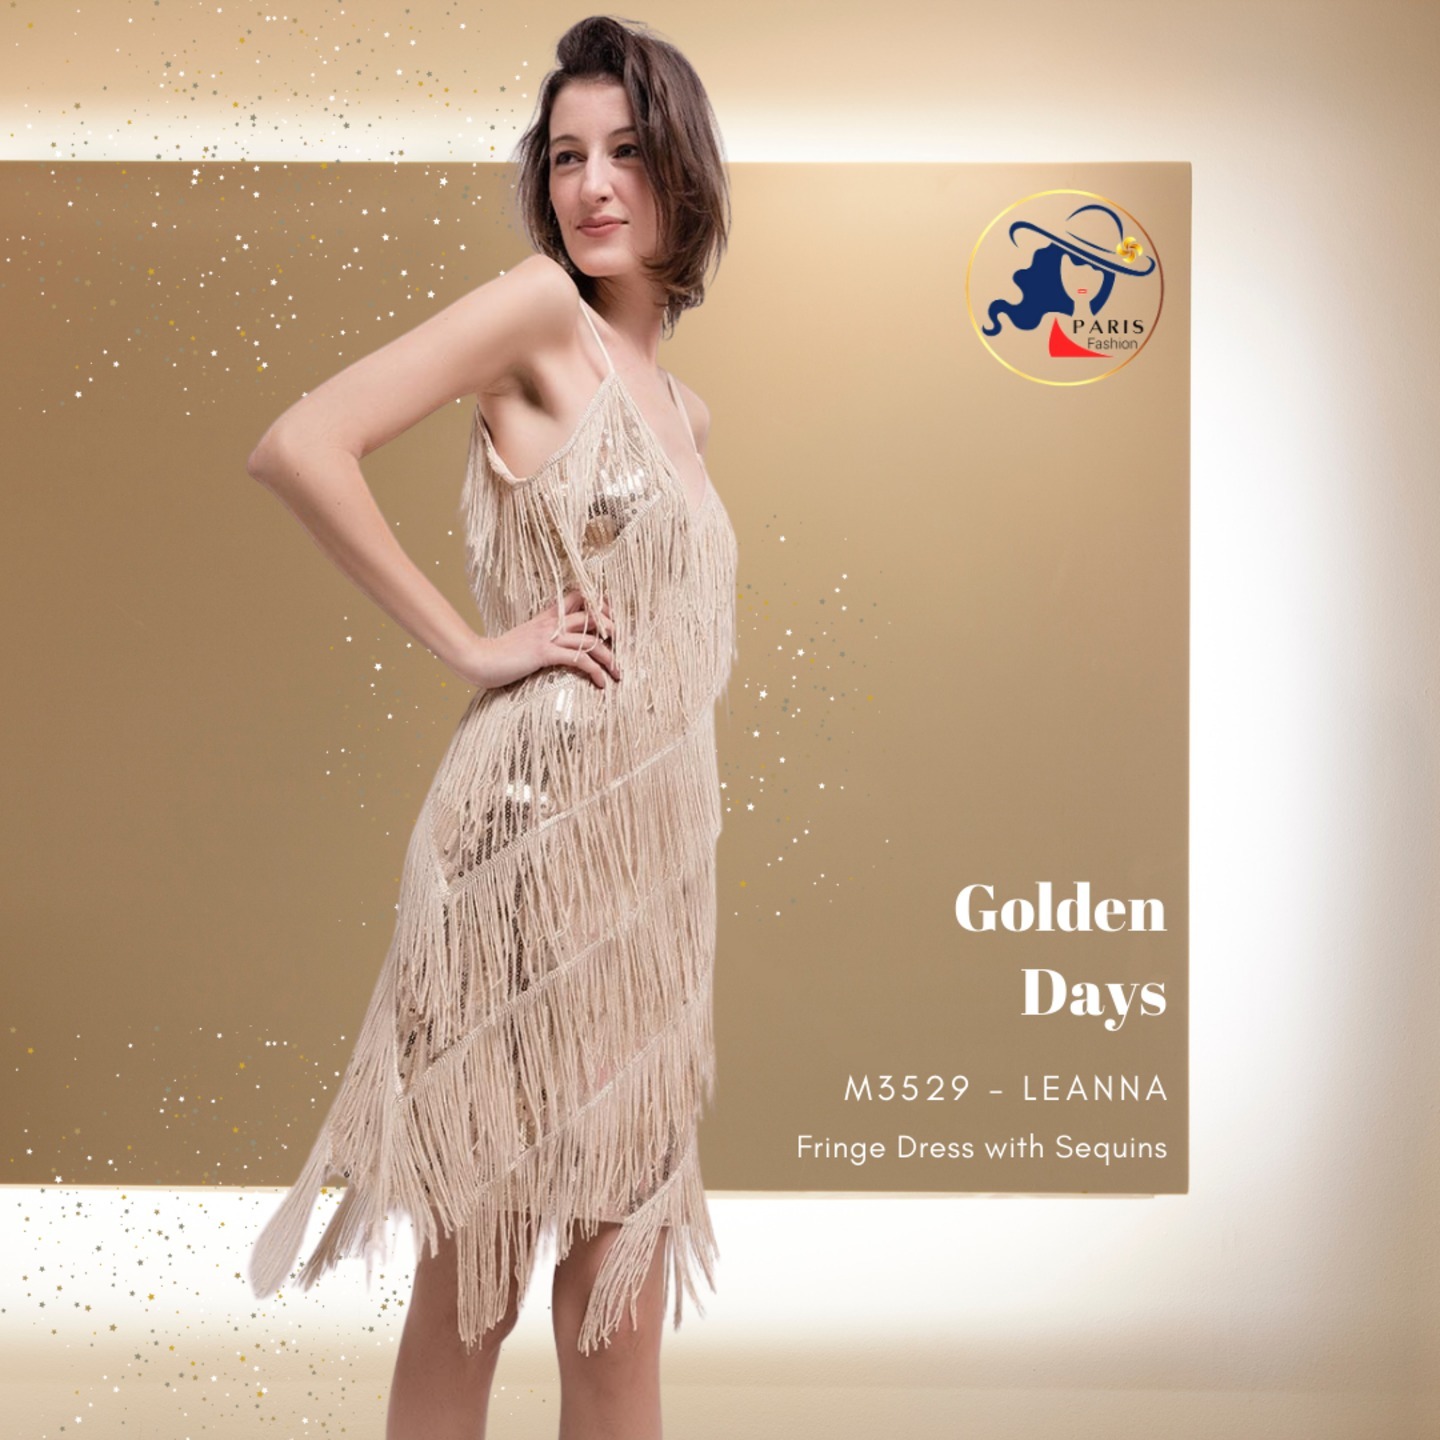 GOLDEN DAYS M3529 LEANNA Cocktail Dress